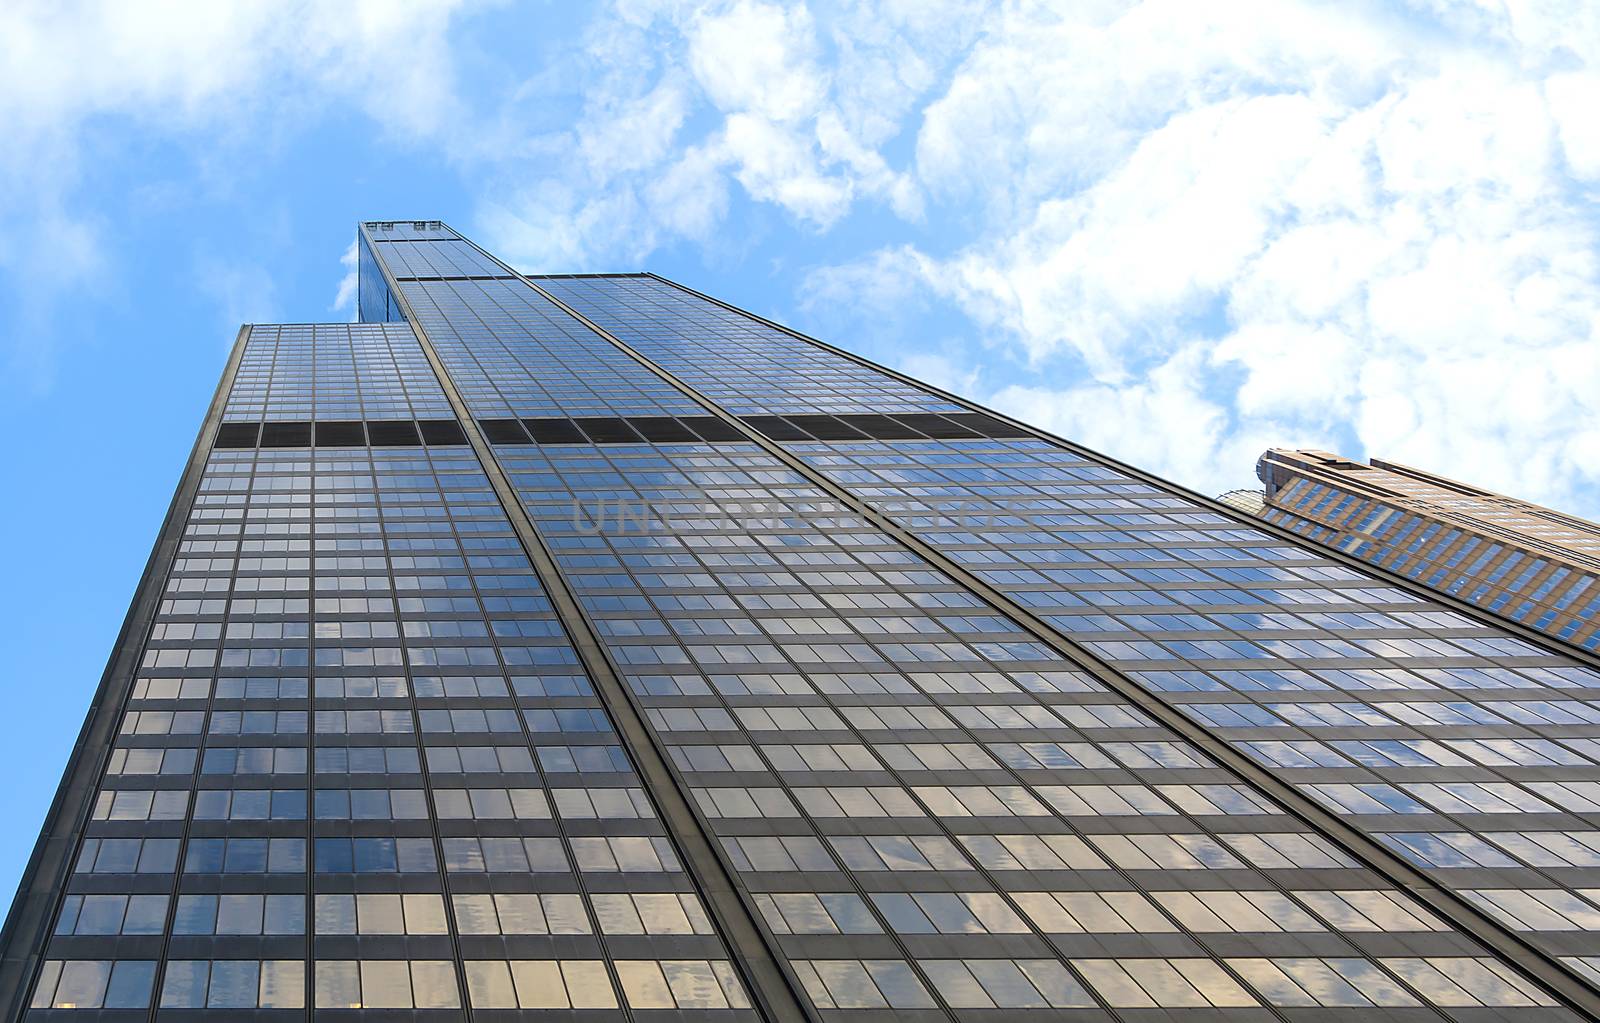 Willis tower in Chicago by rarrarorro